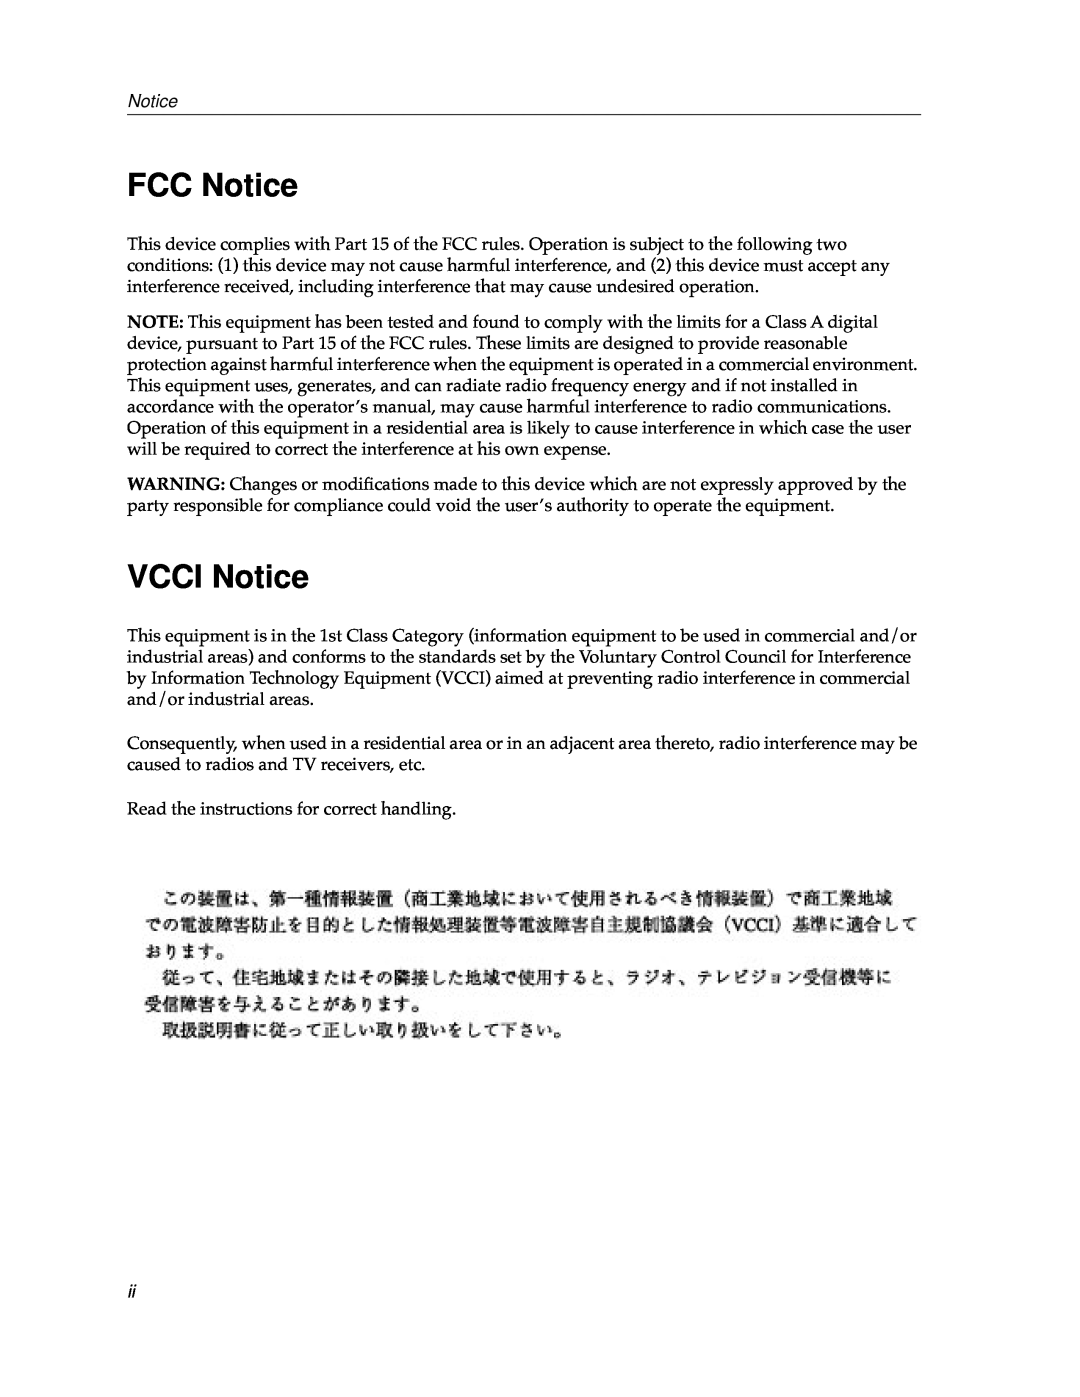 Cabletron Systems 9F106-01 manual FCC Notice, VCCI Notice 